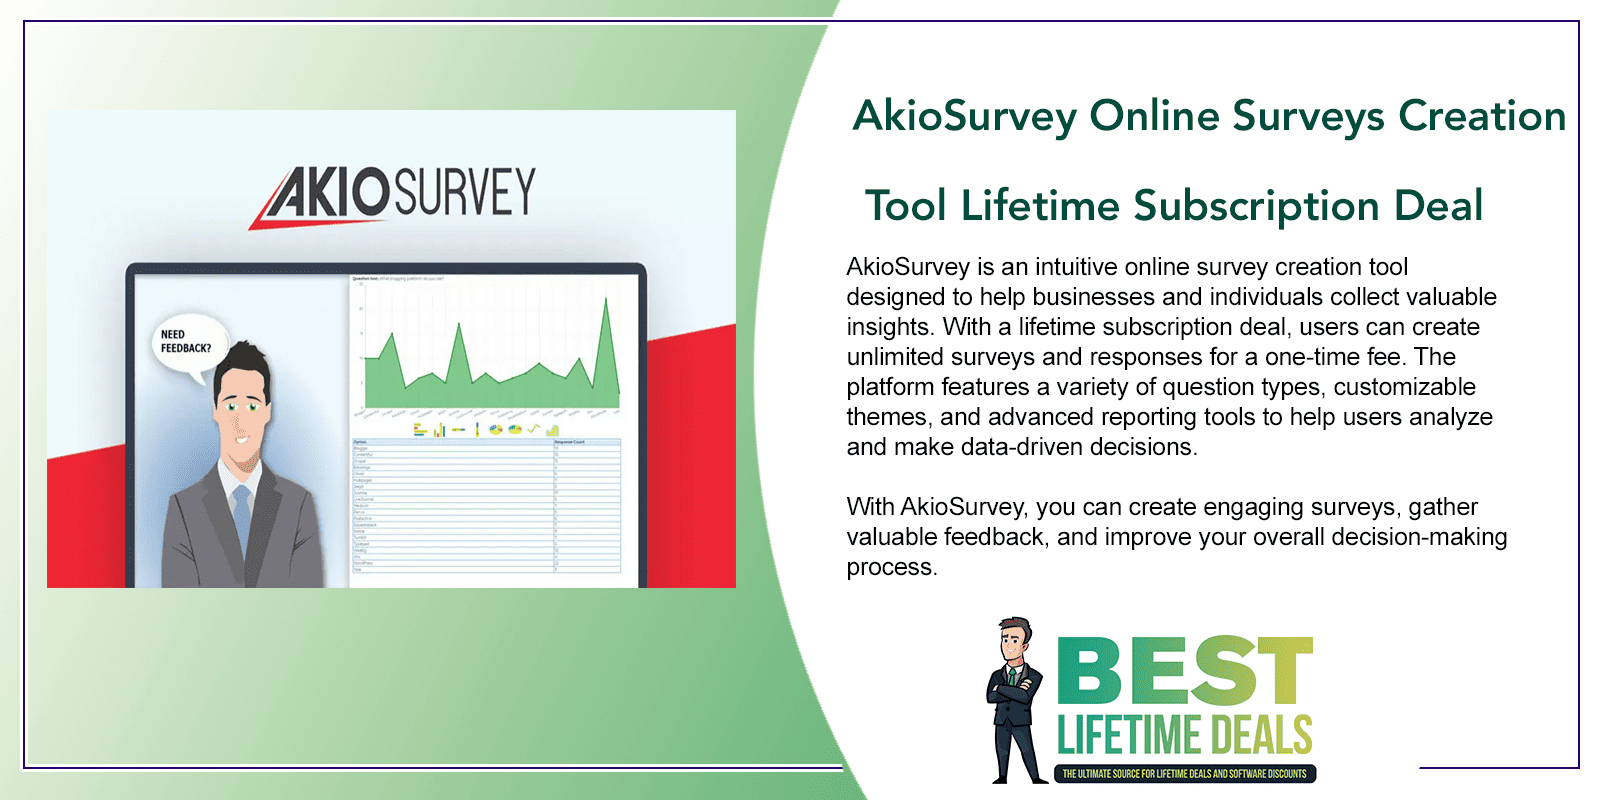 AkioSurvey Online Surveys Creation Tool Lifetime Subscription Deal Featured Image